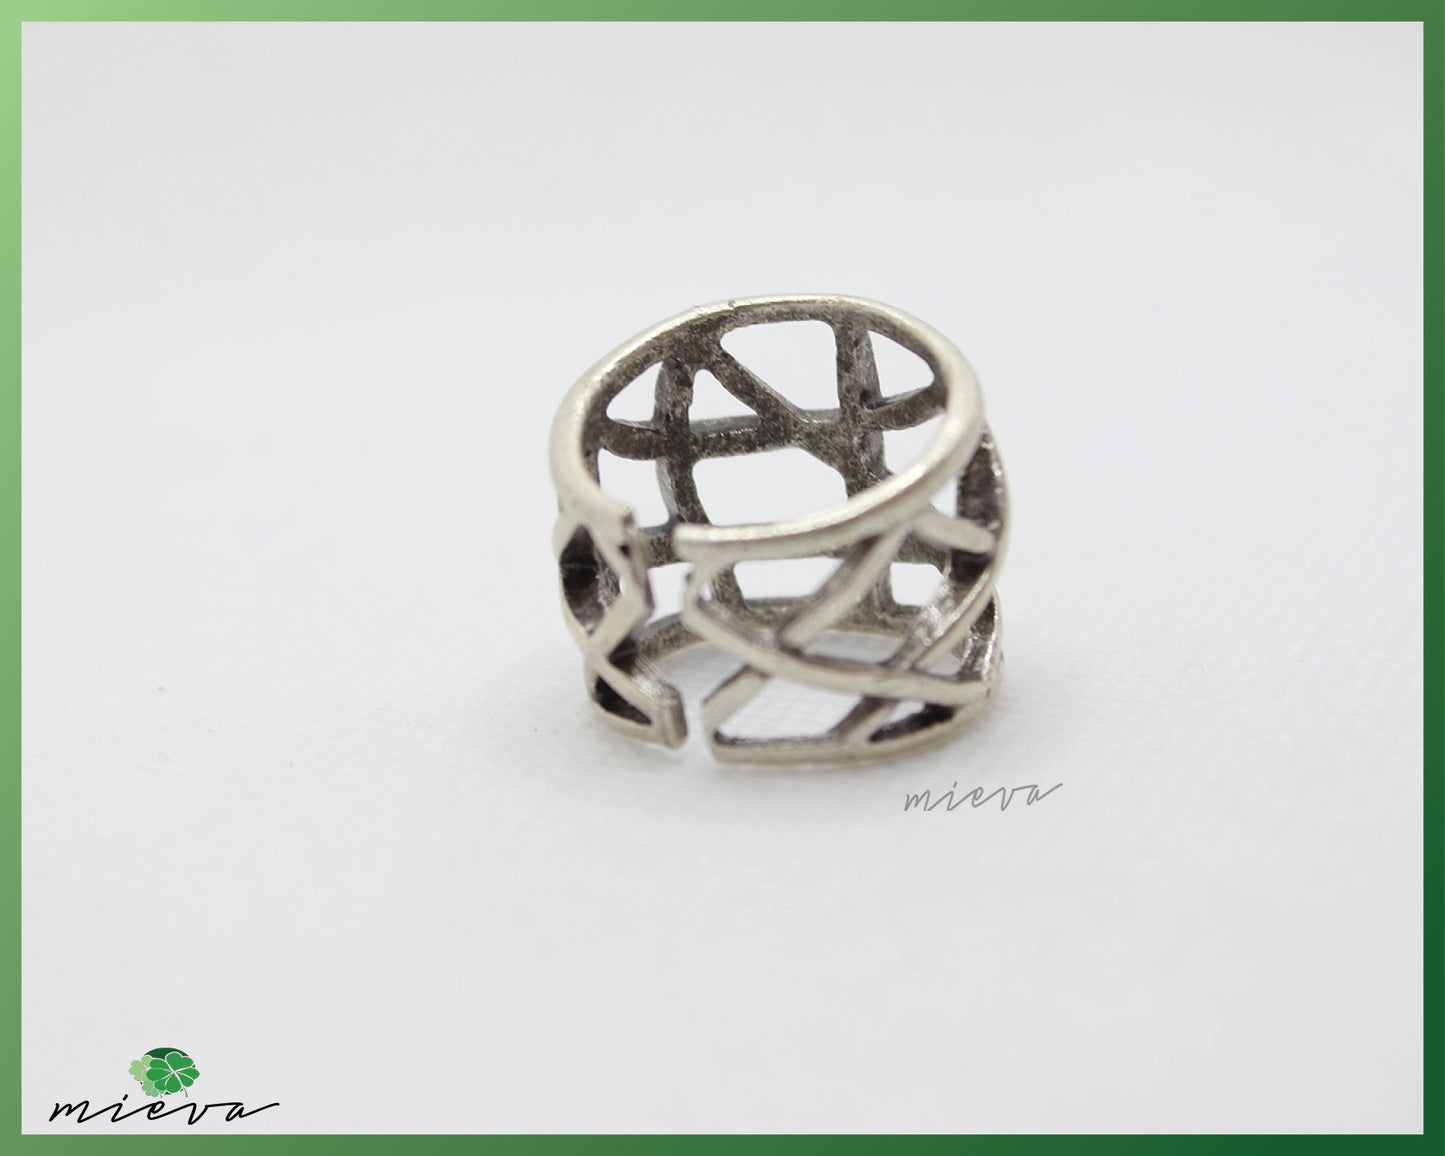 Elegant Silver Geometric Band Ring